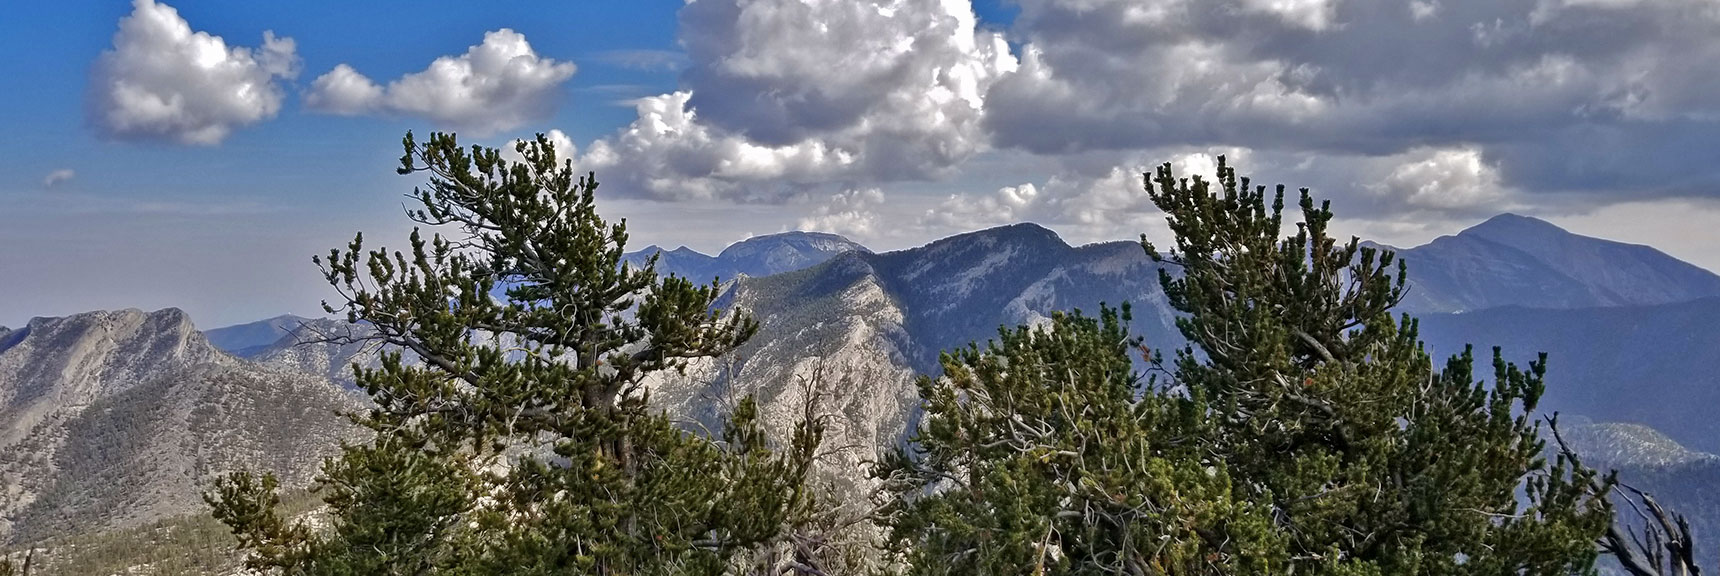 McFarland Peak, Angel Peak, Mummy Mt and Charleston Peak from Bonanza Peak Summit | Bonanza Peak from Lee Canyon via the Lower Bristlecone Pine Trail and Bonanza Trail | Spring Mountains, Nevada